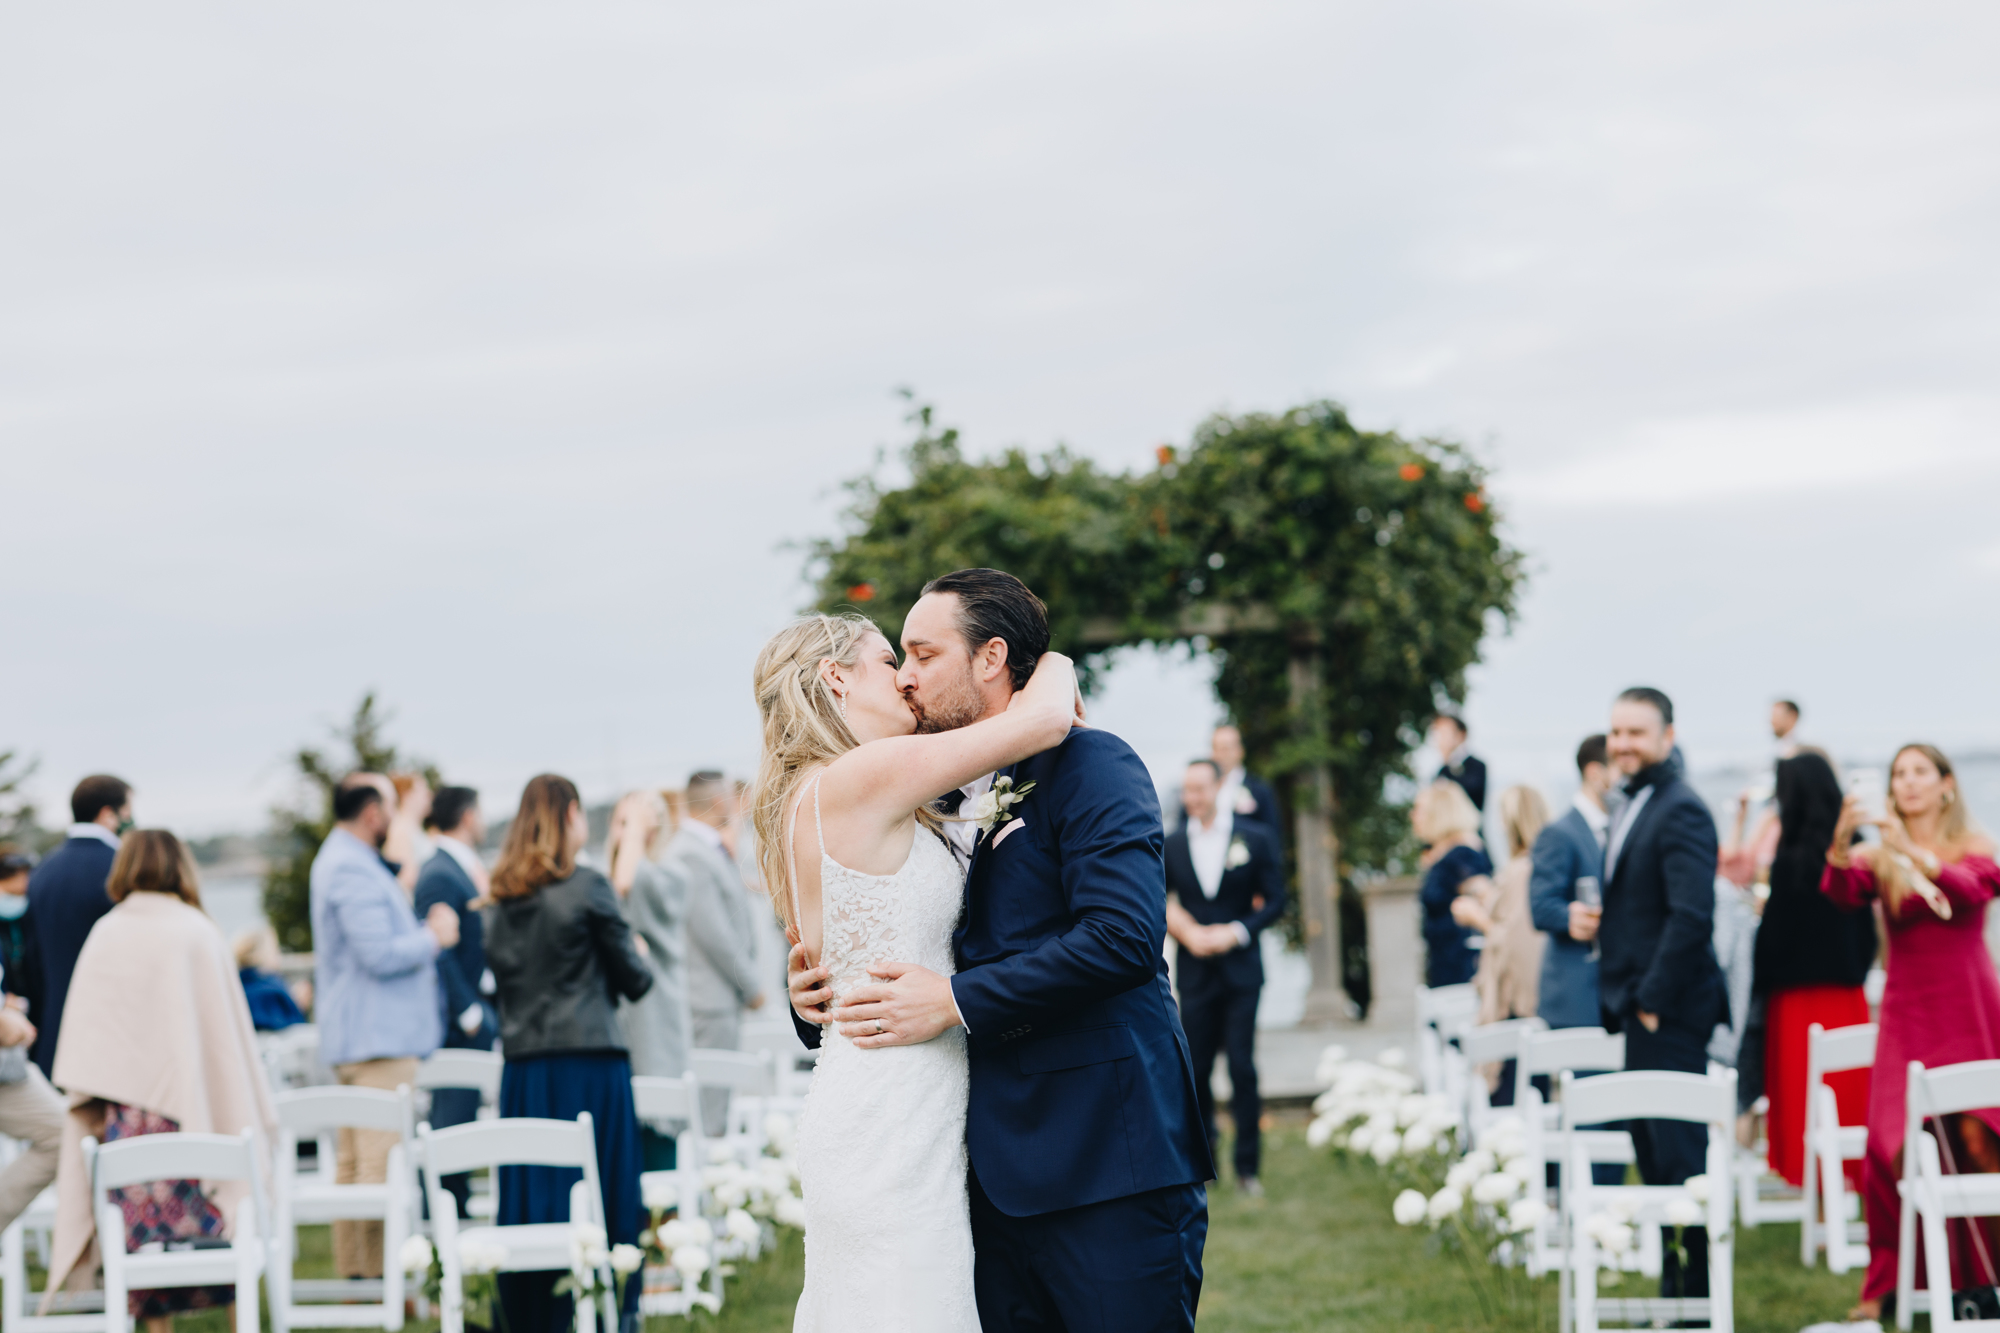 Wedding kiss at Rhode Island venue